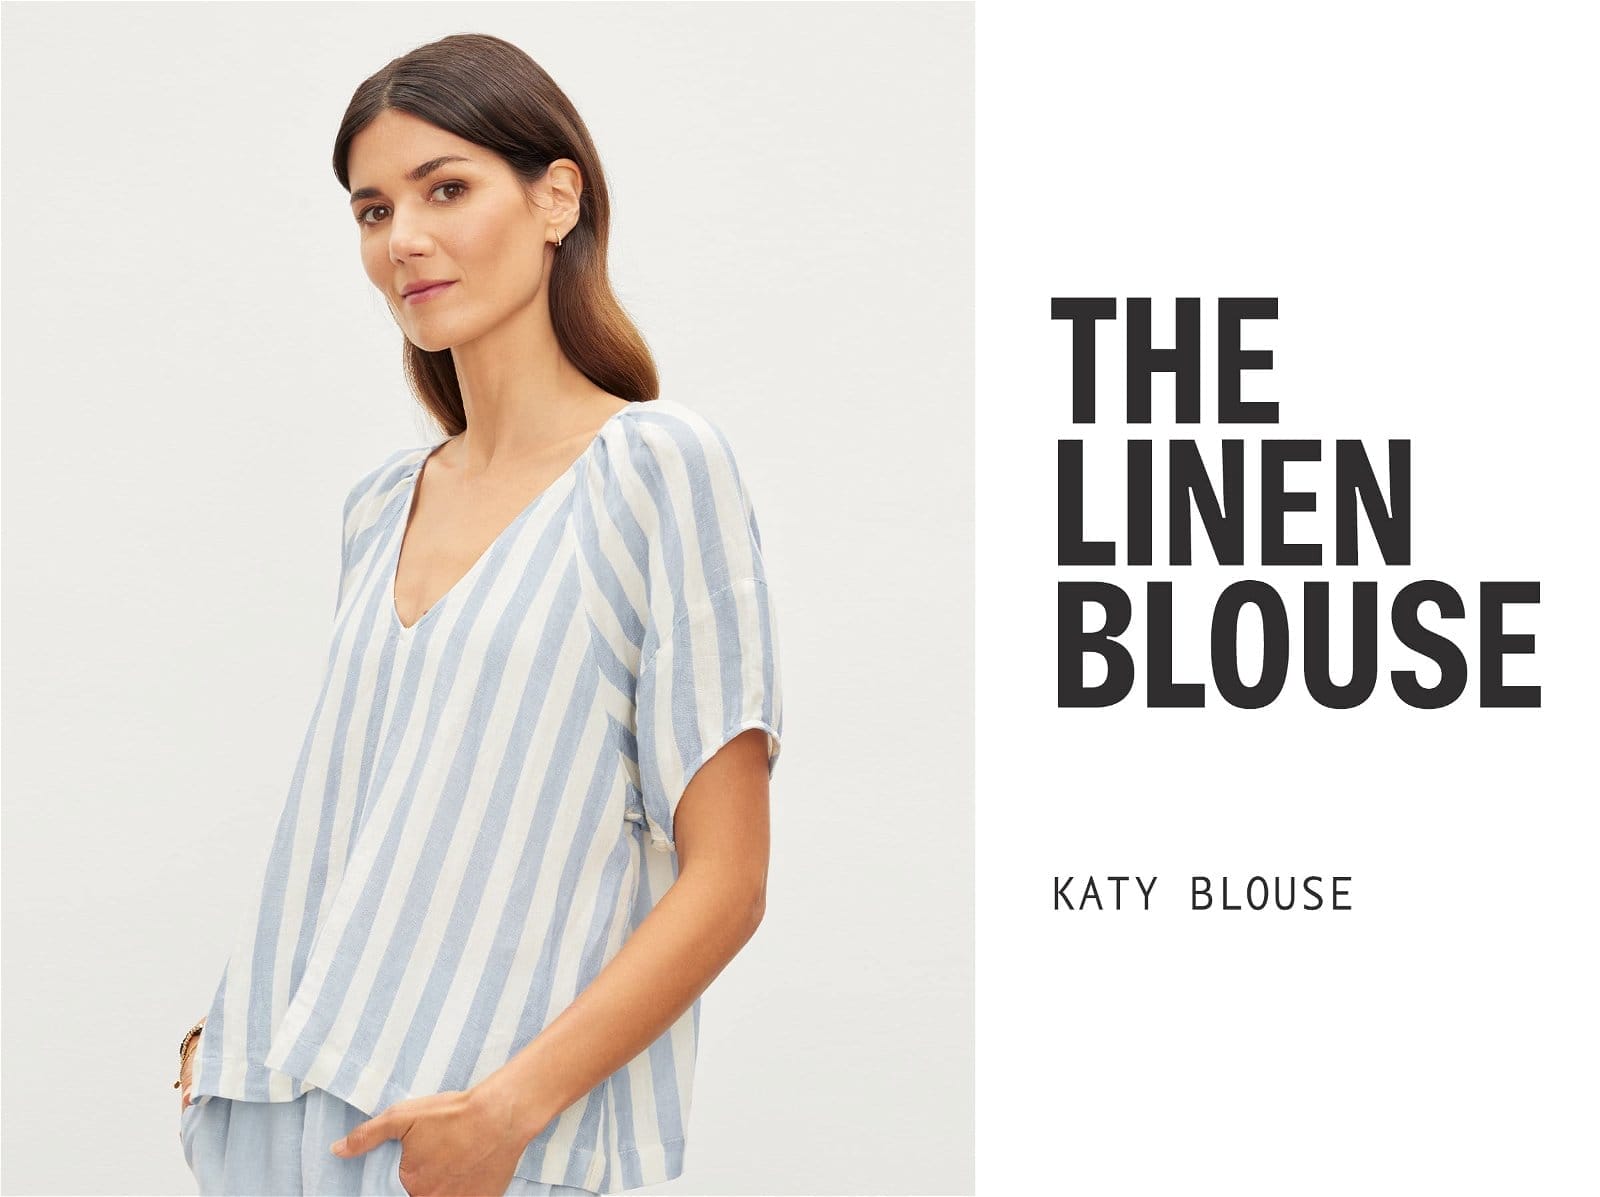 THE LINEN BLOUSE: Katy Blouse